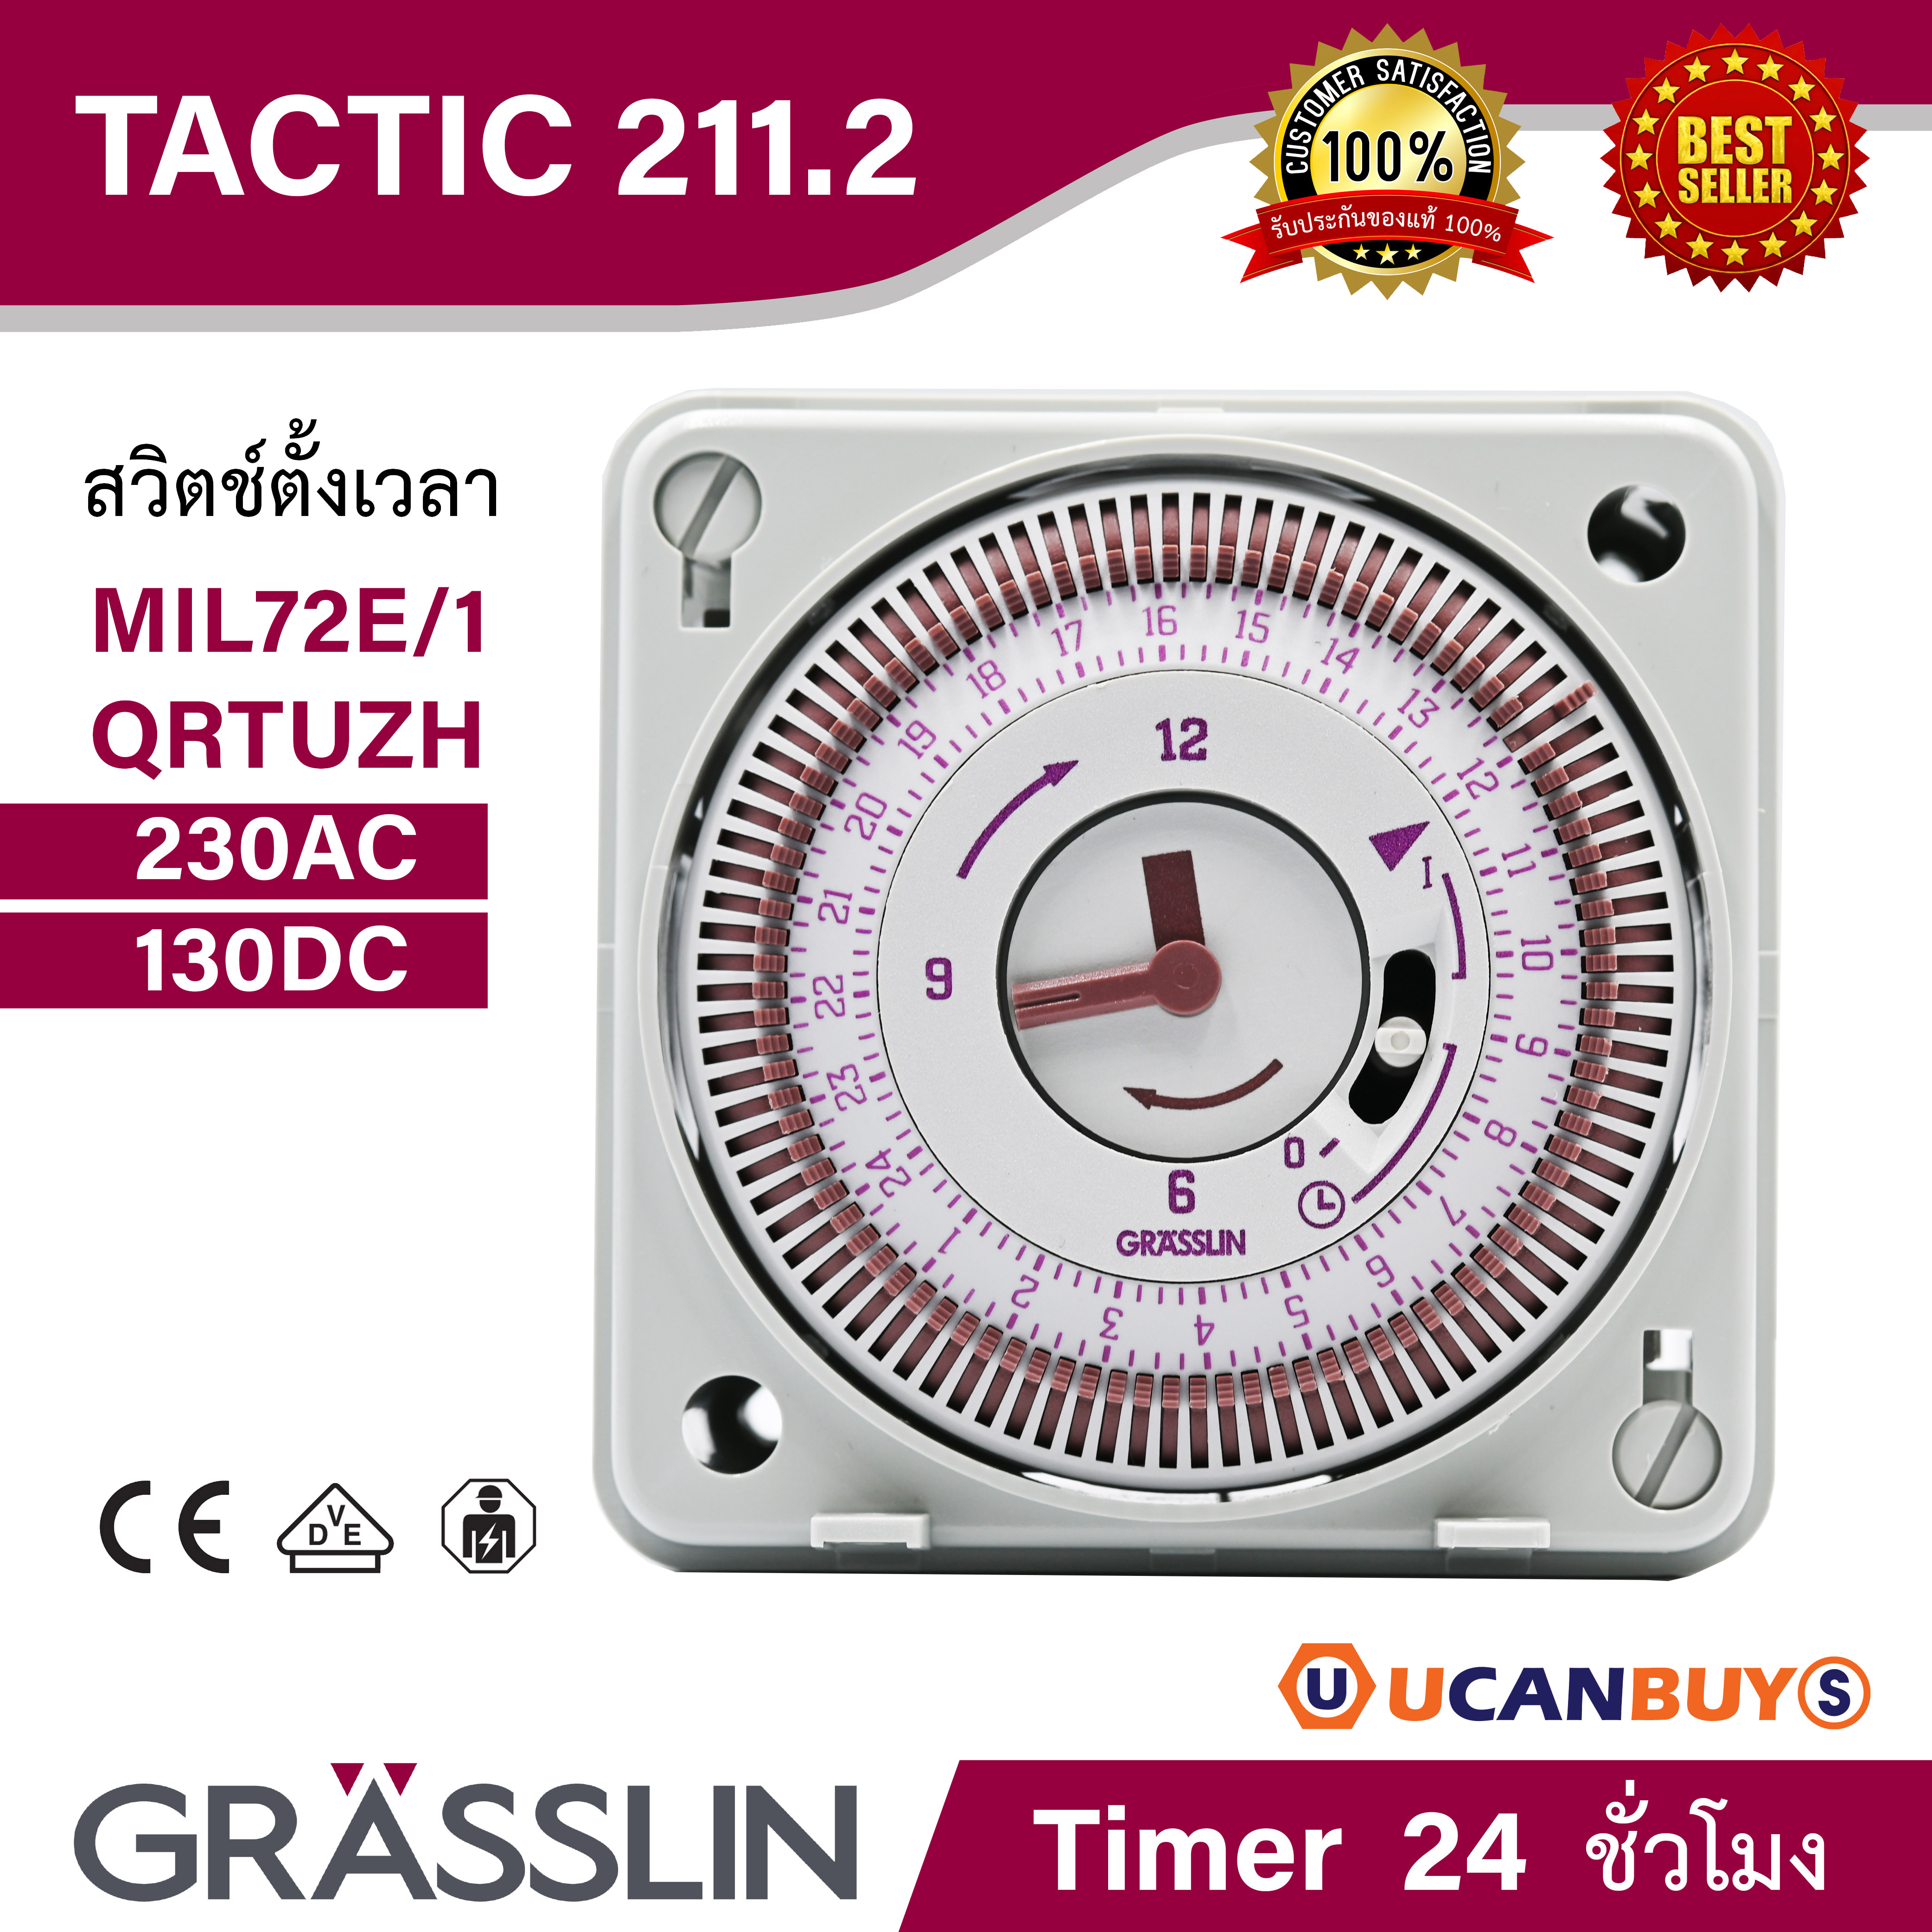 GRASSLIN Timer Switches รุ่น MIL72E/1 QRTUZH 230AC/130DC : TACTIC 211.2 นาฬิกาตั้งเวลา 24 ชั่วโมง สั่งซื้อได้ที่ร้าน Ucanbuys